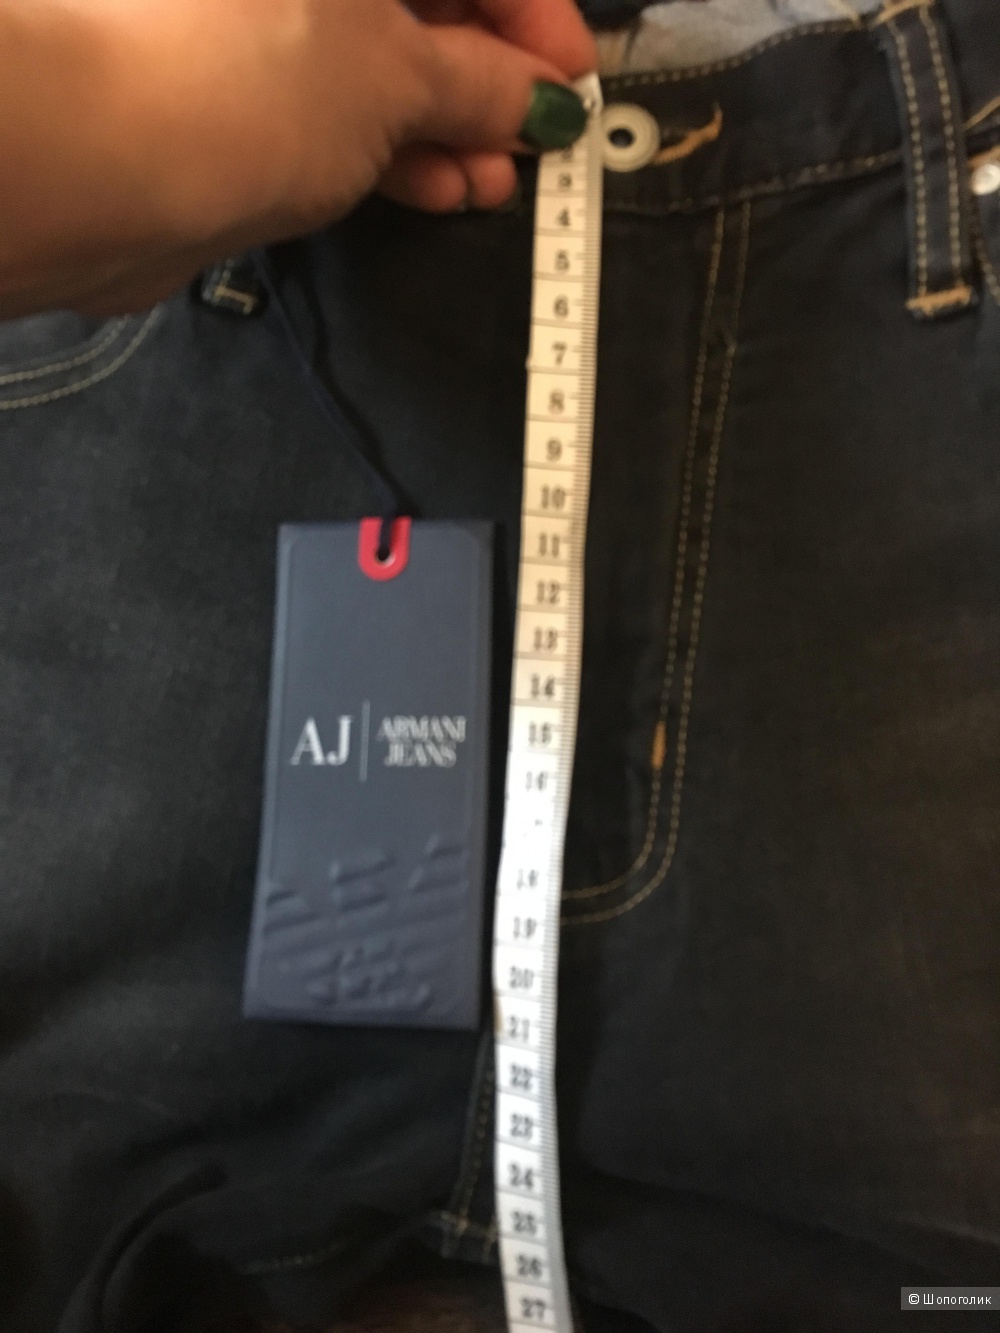 Мужские джинсы ARMANI JEANS, размер 30W-34L